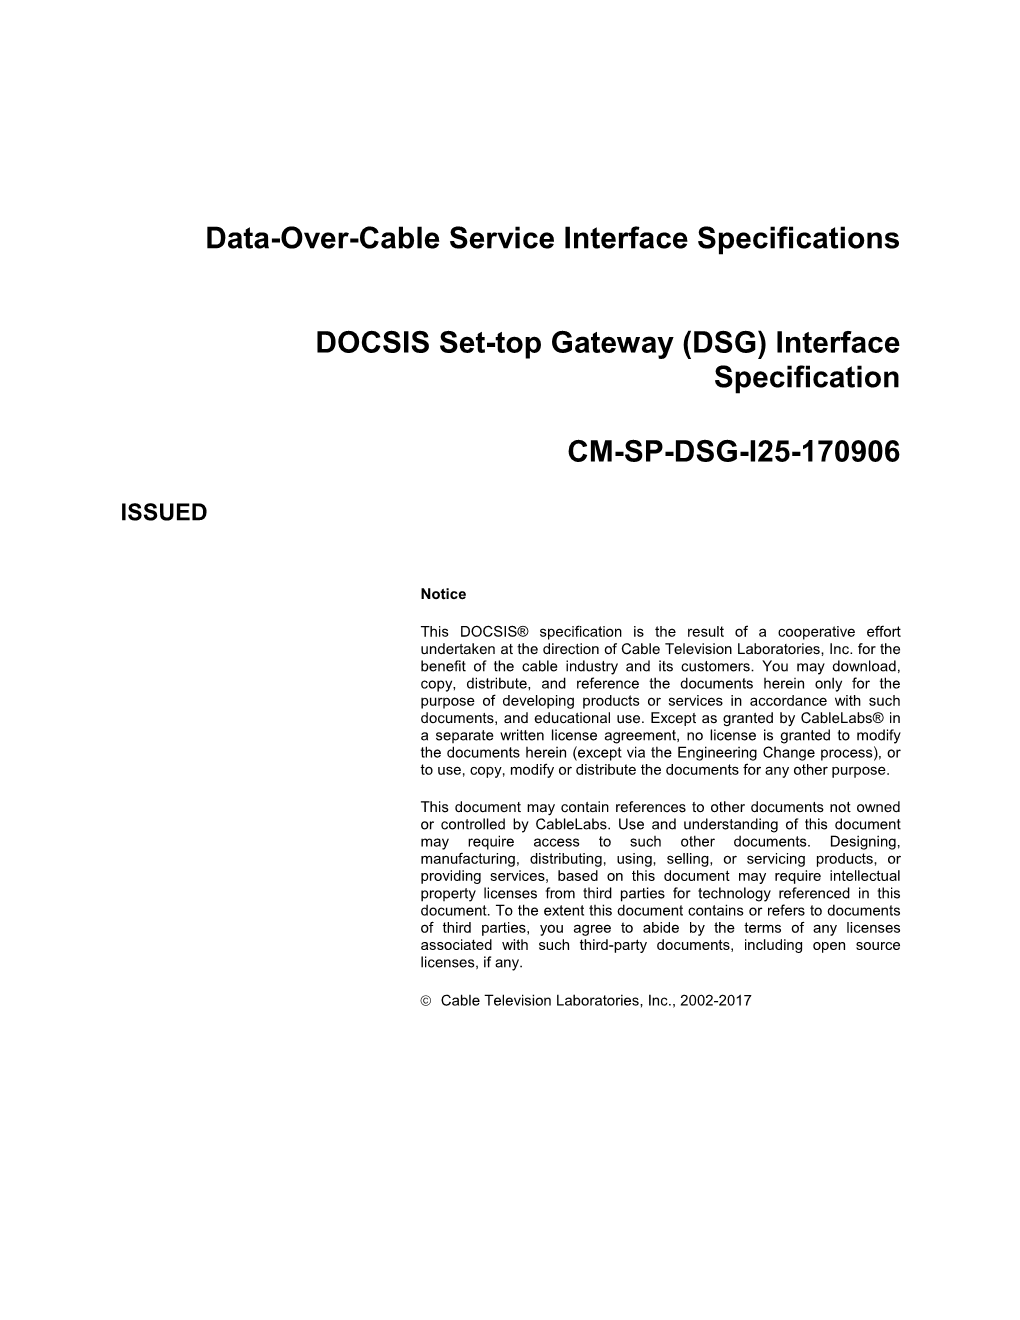 Interface Specification CM-SP-DSG-I25-170906